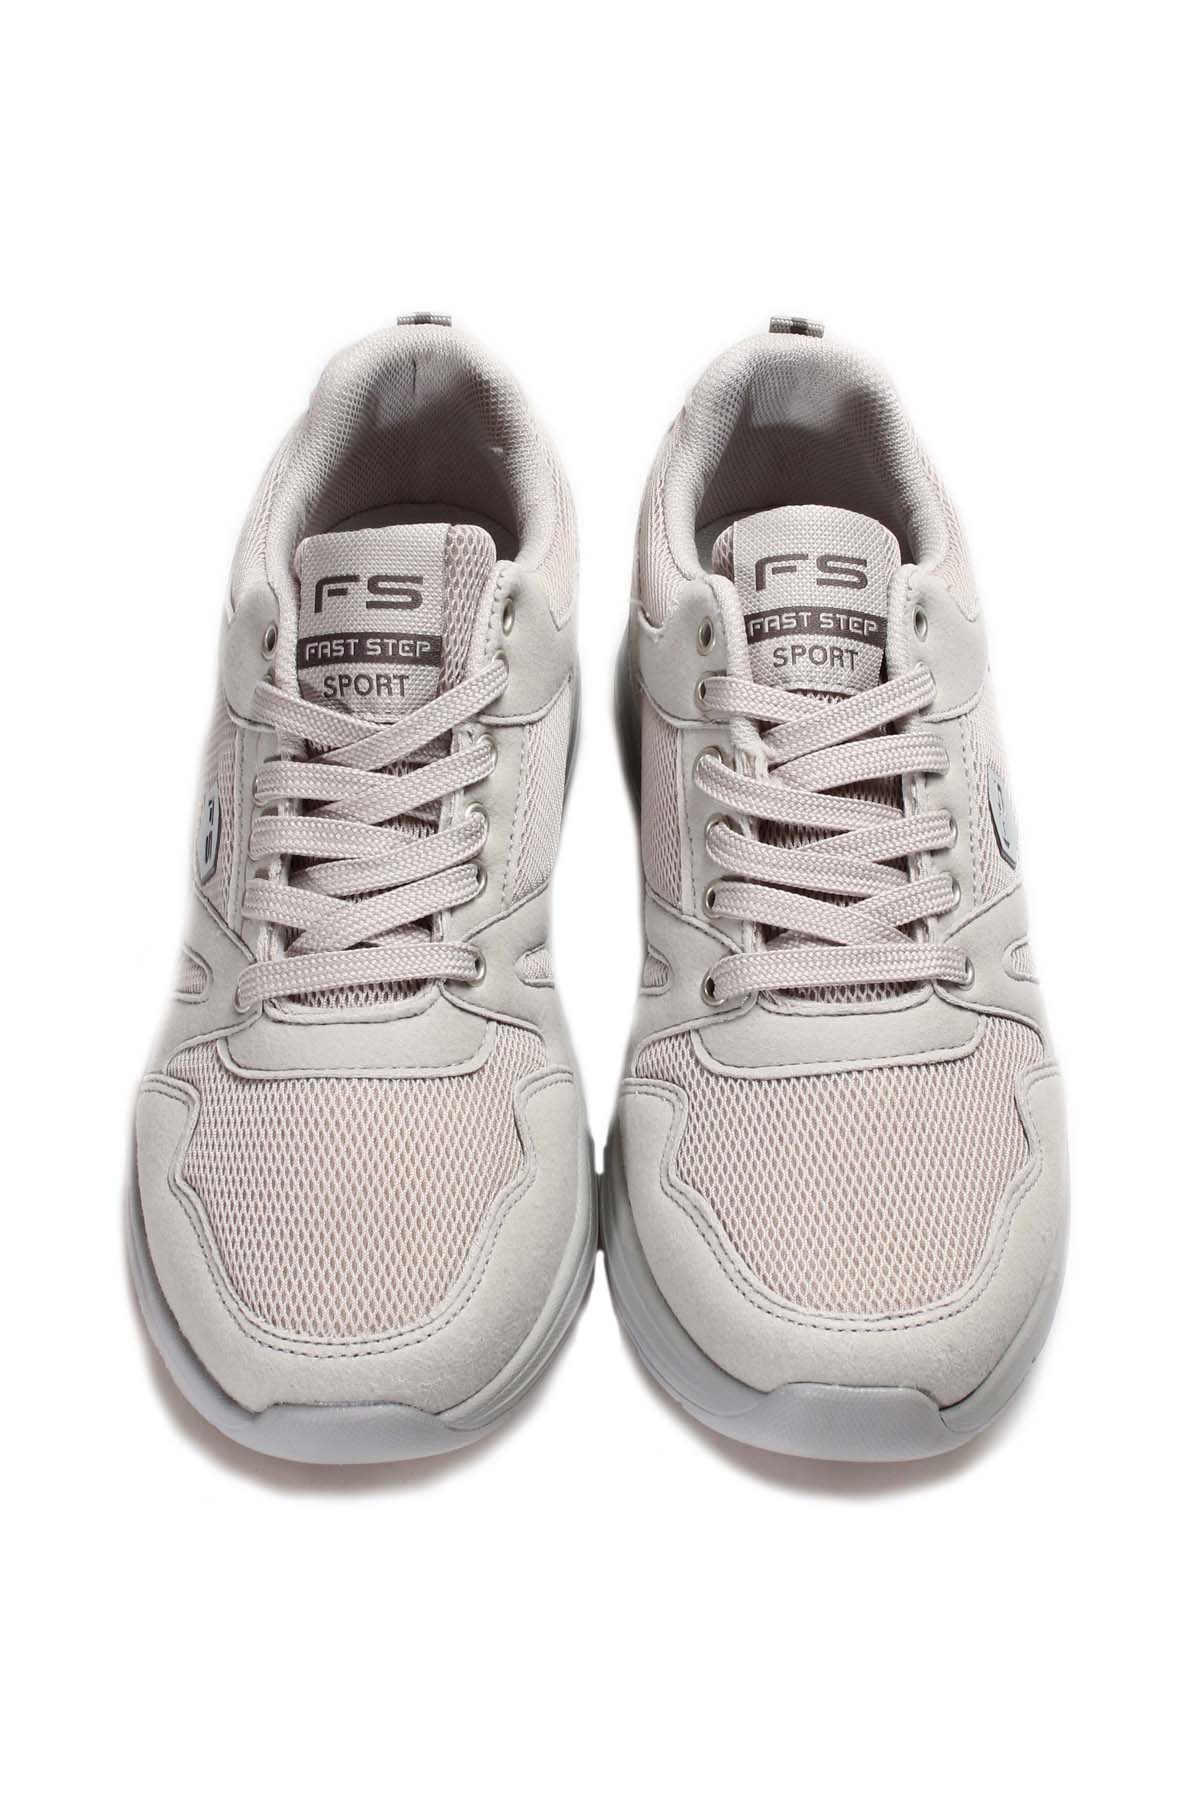 Fast Step Unisex Sport Shoes White 589XA020